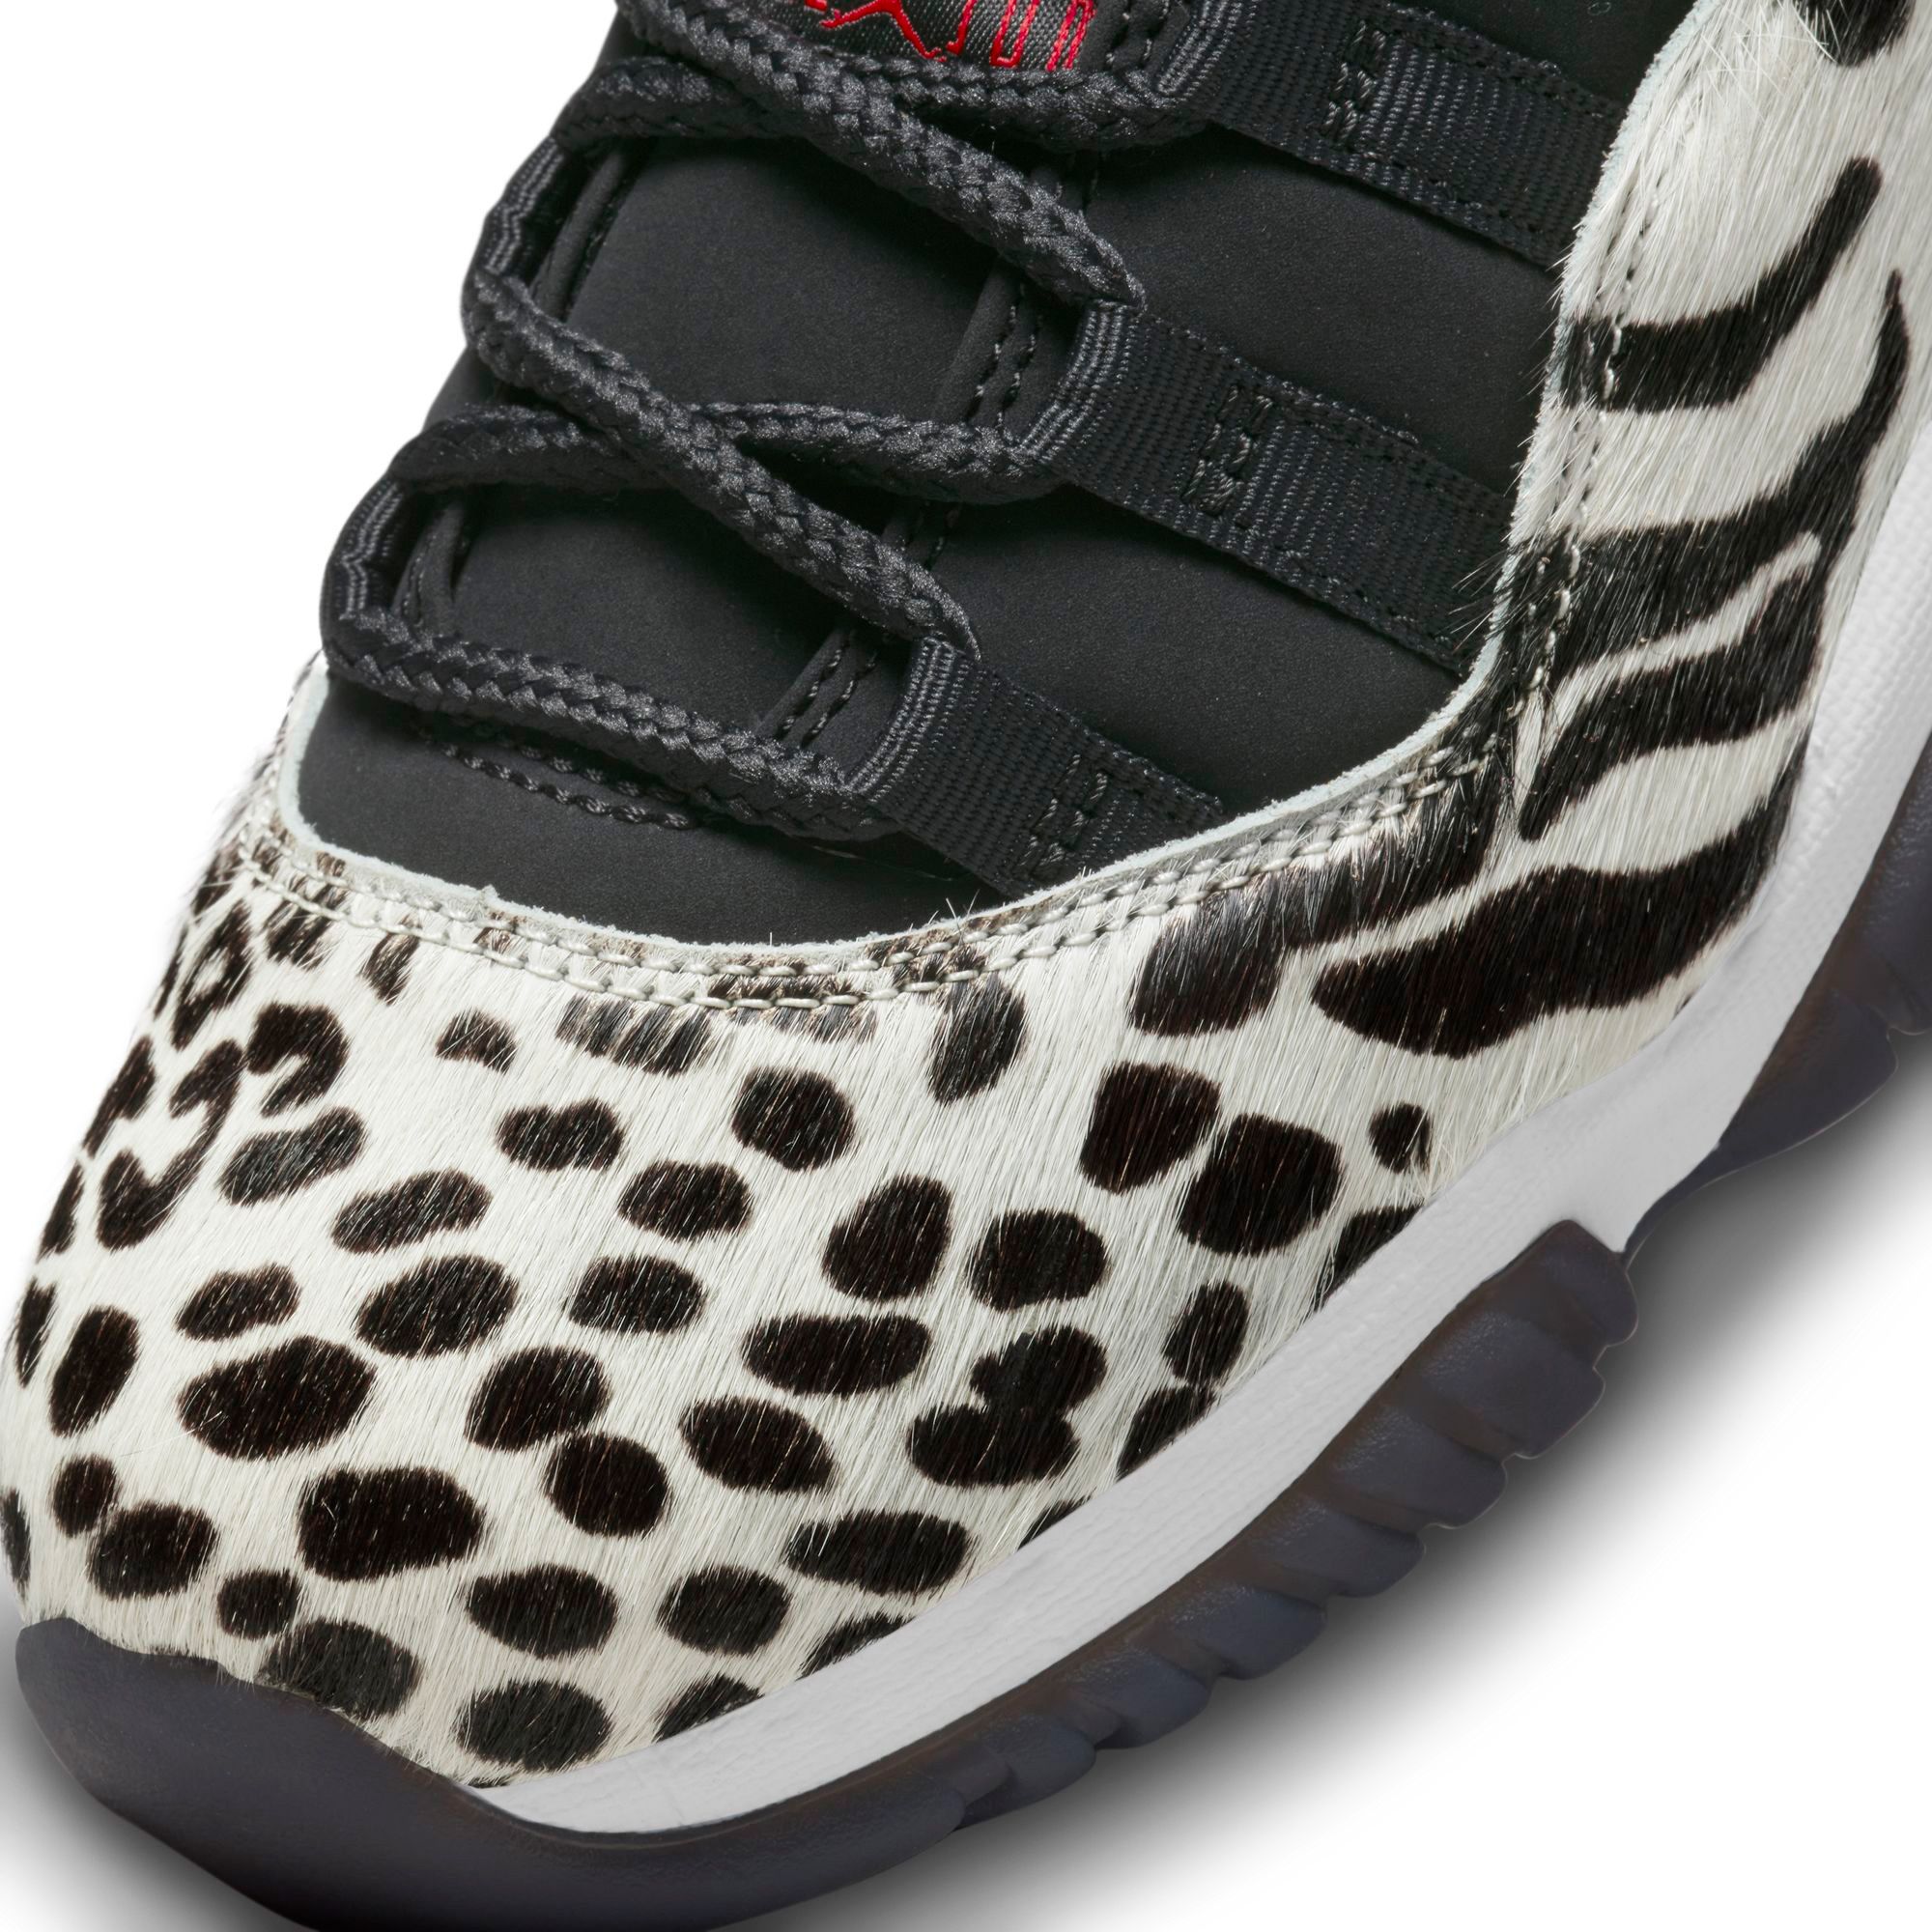 whatapp8613636943557 on X:  Air Jordan 11 LV x  Supreme Gym Red Black White  / X